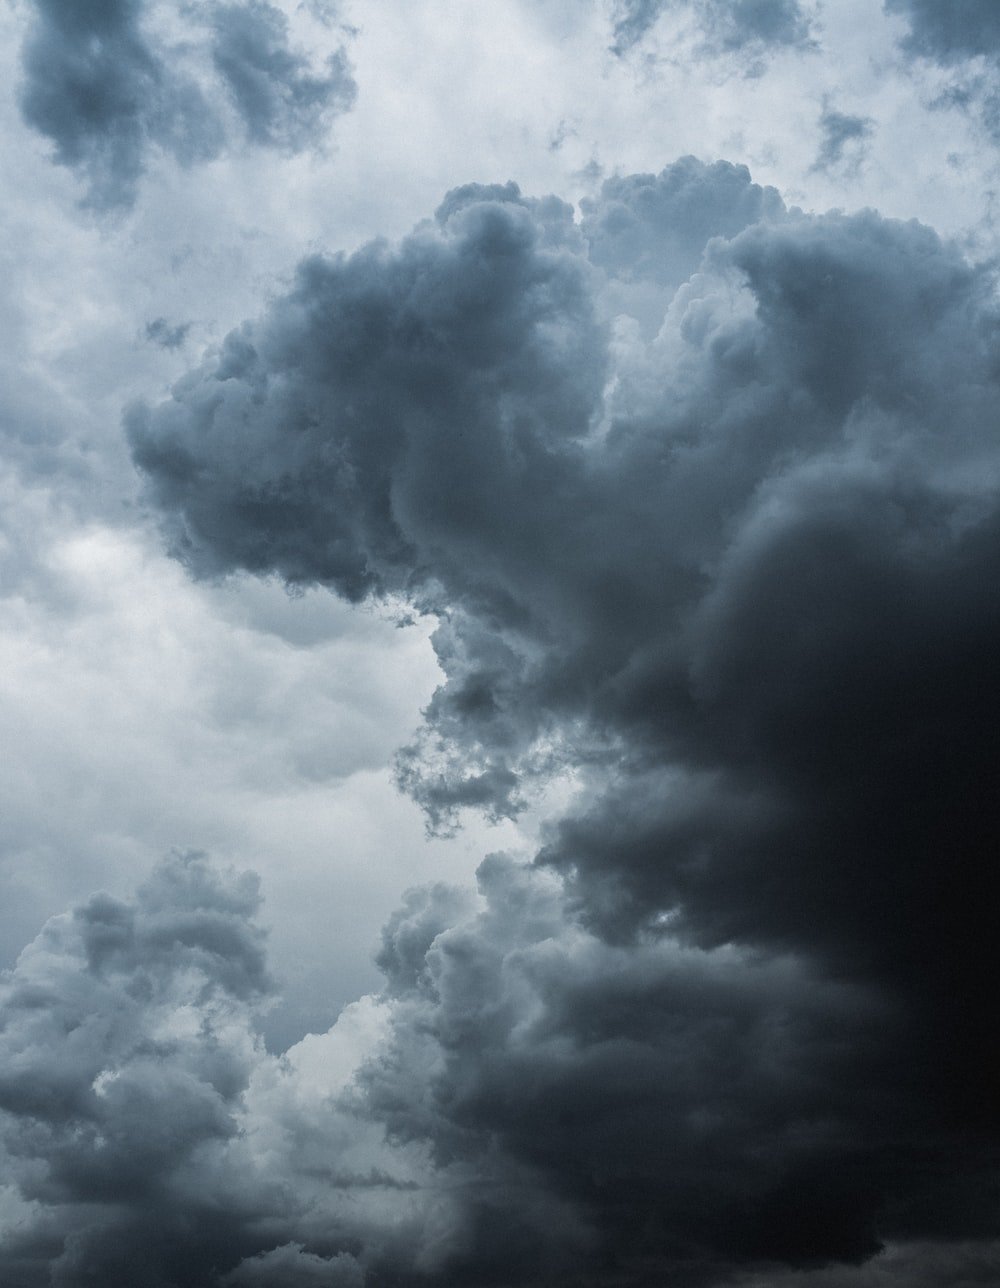 Rain Cloud Picture. Download Free Image